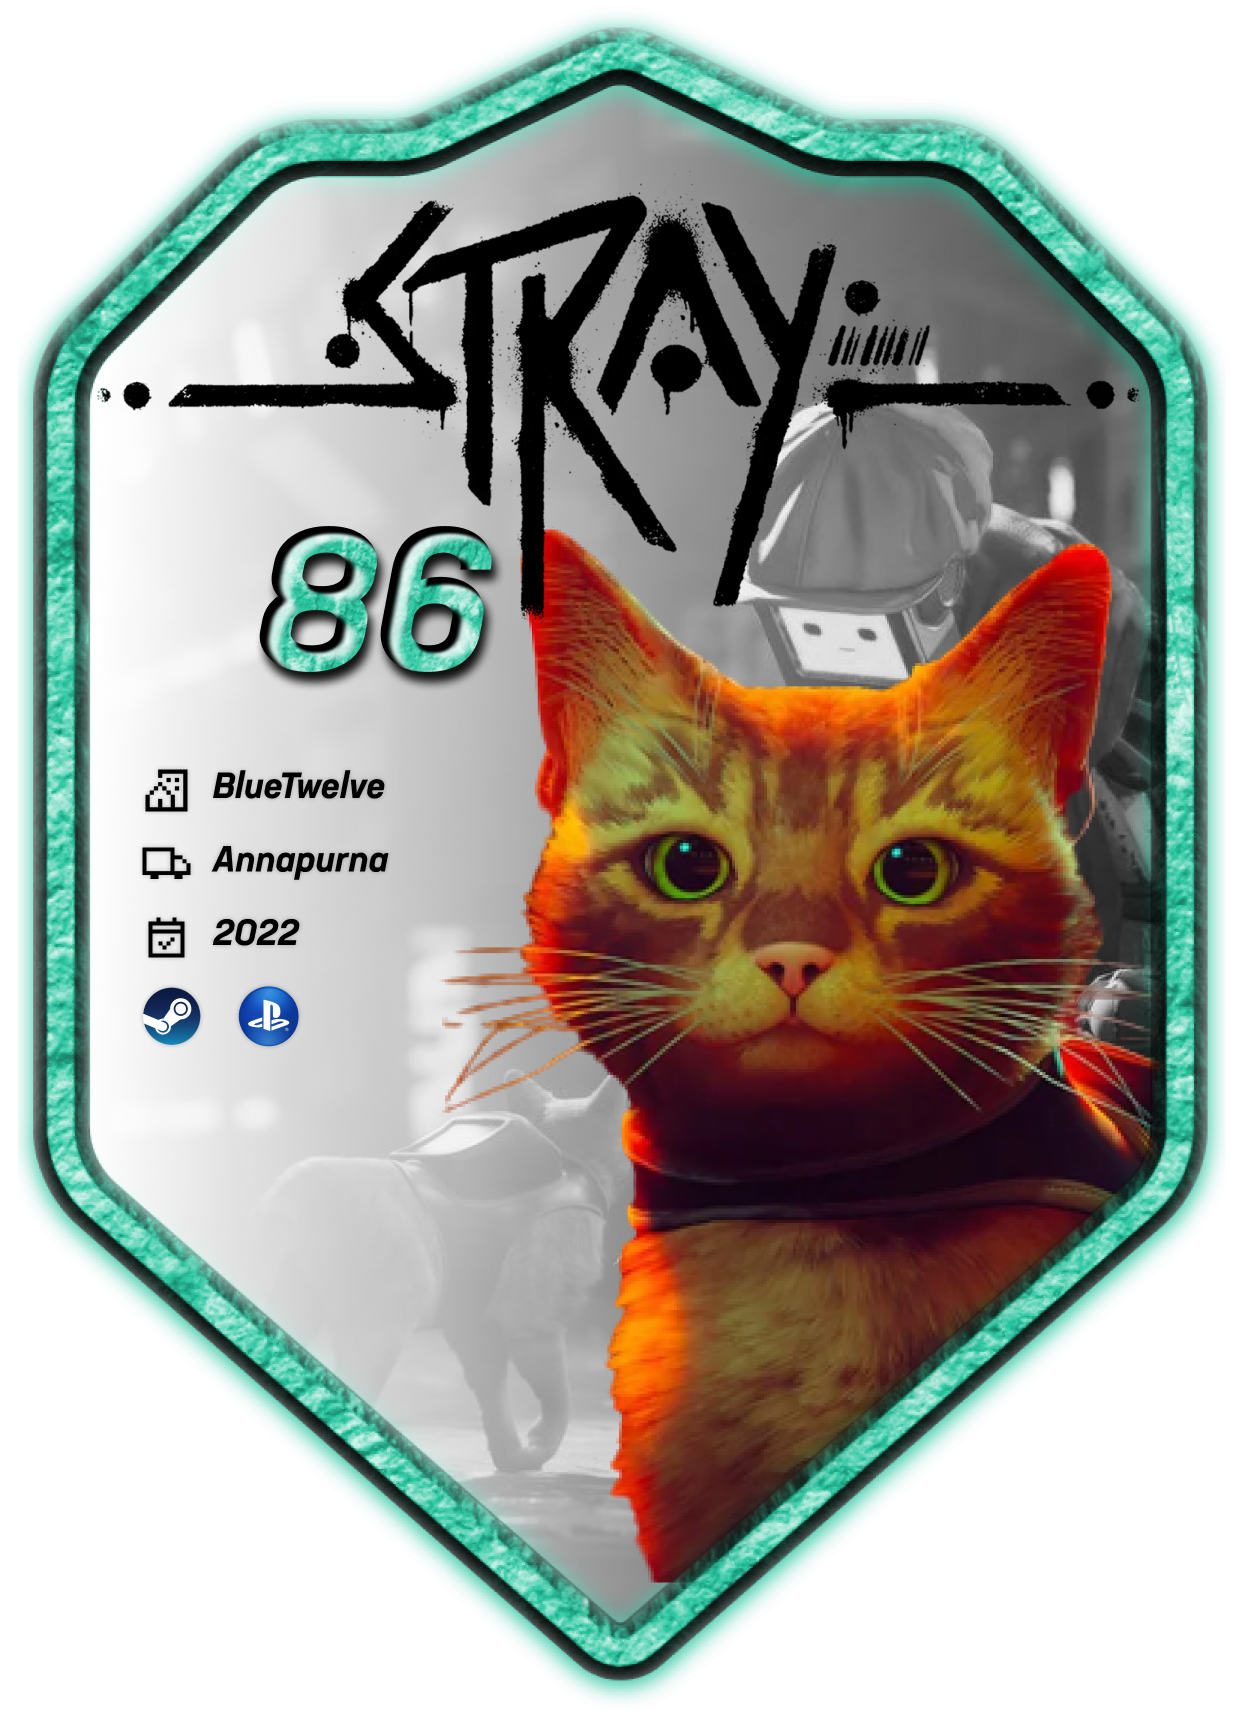 10 curiosidades sobre Stray, o jogo do gato 